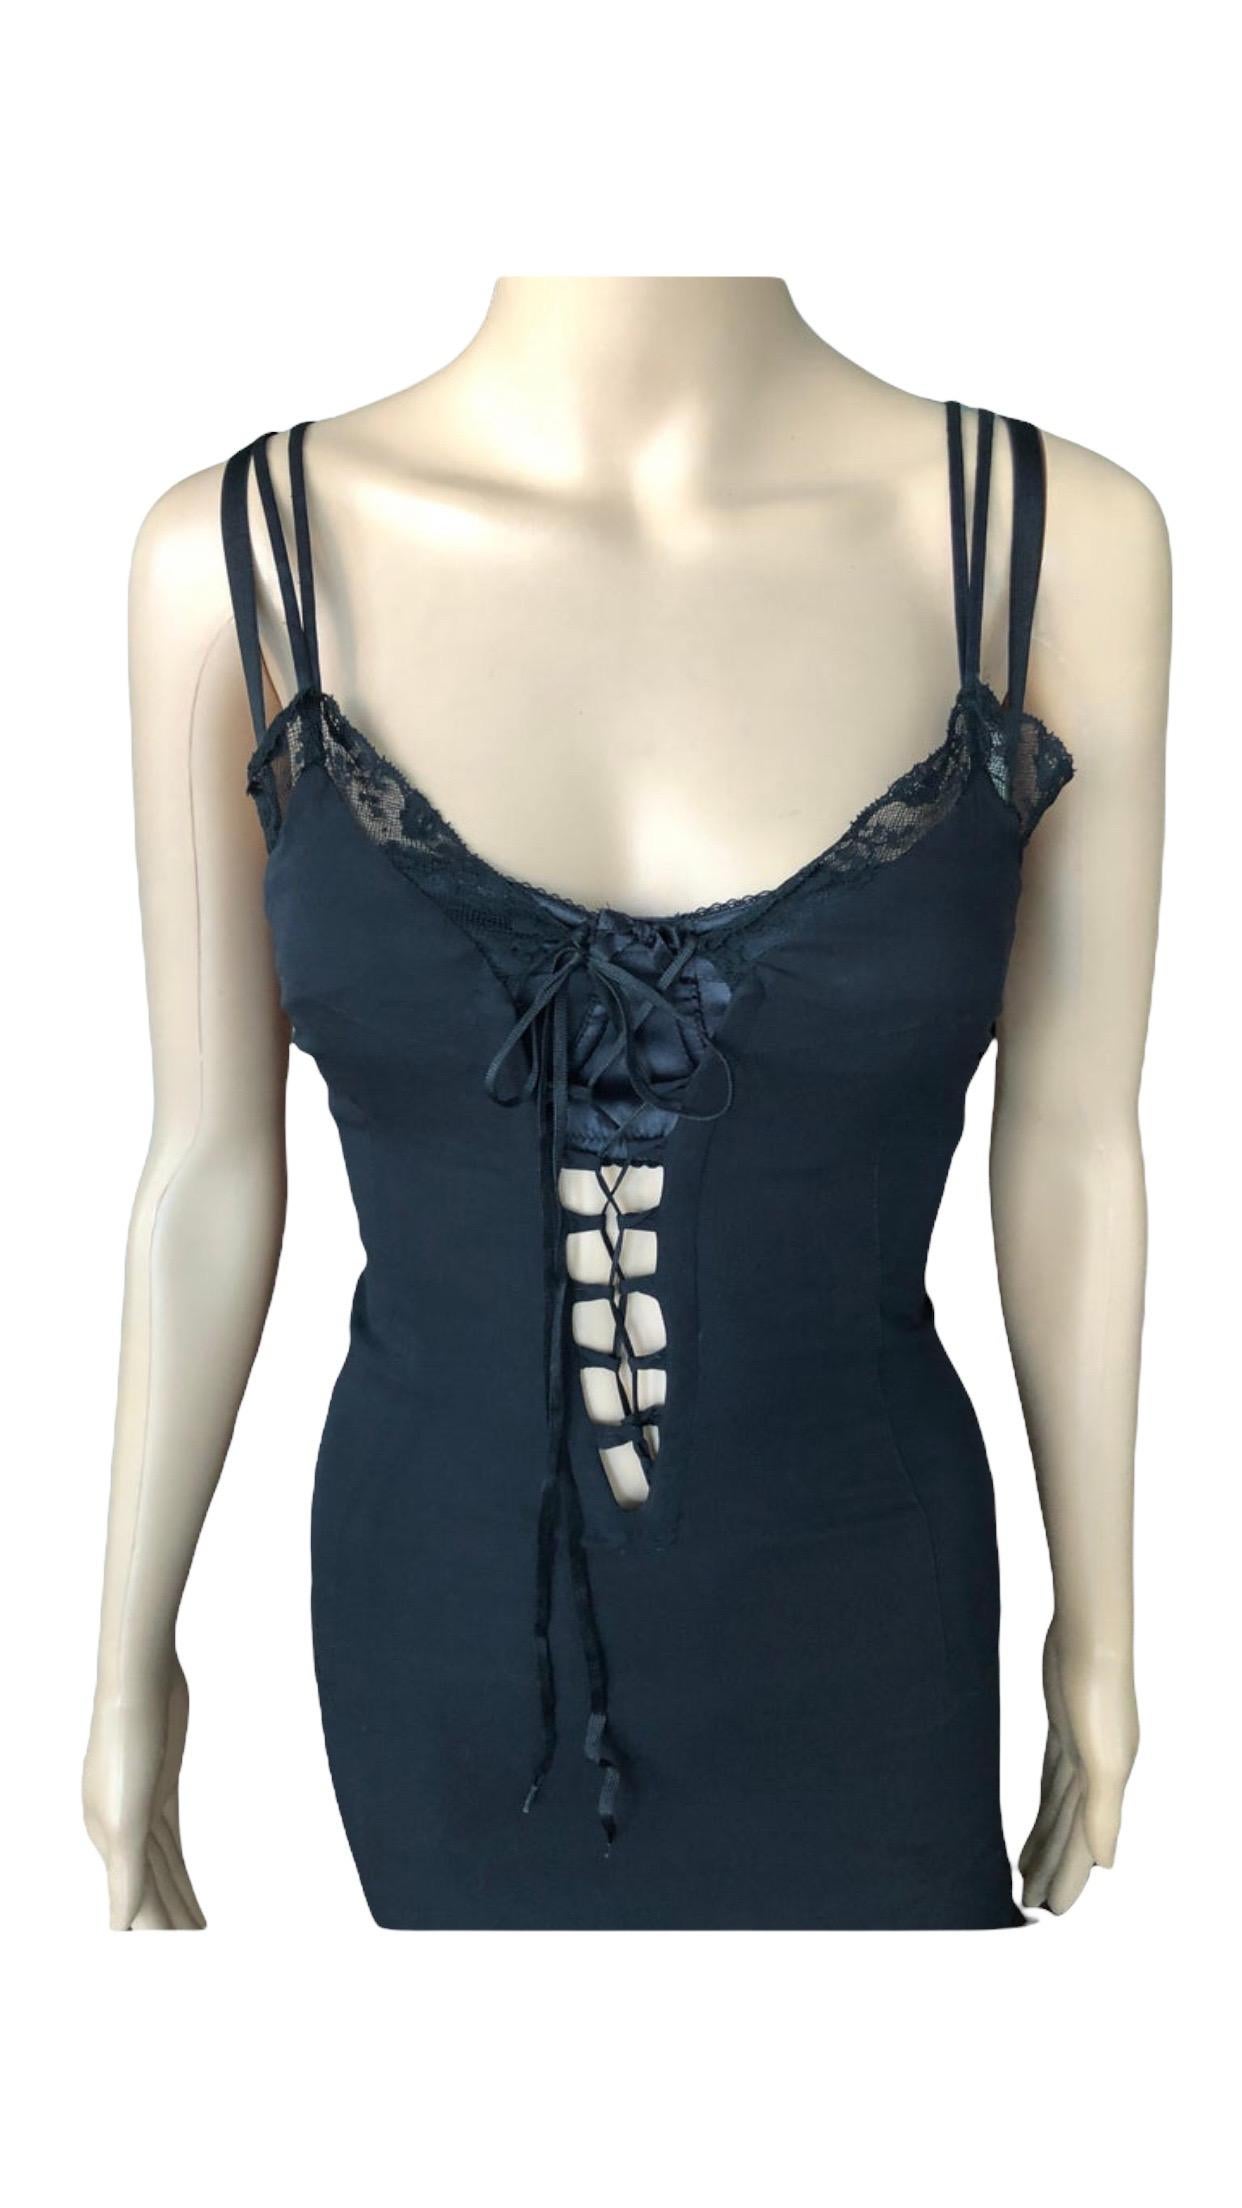 D&G by Dolce & Gabbana c. 2001 Corset Lace Up Bra Black Dress For Sale 2